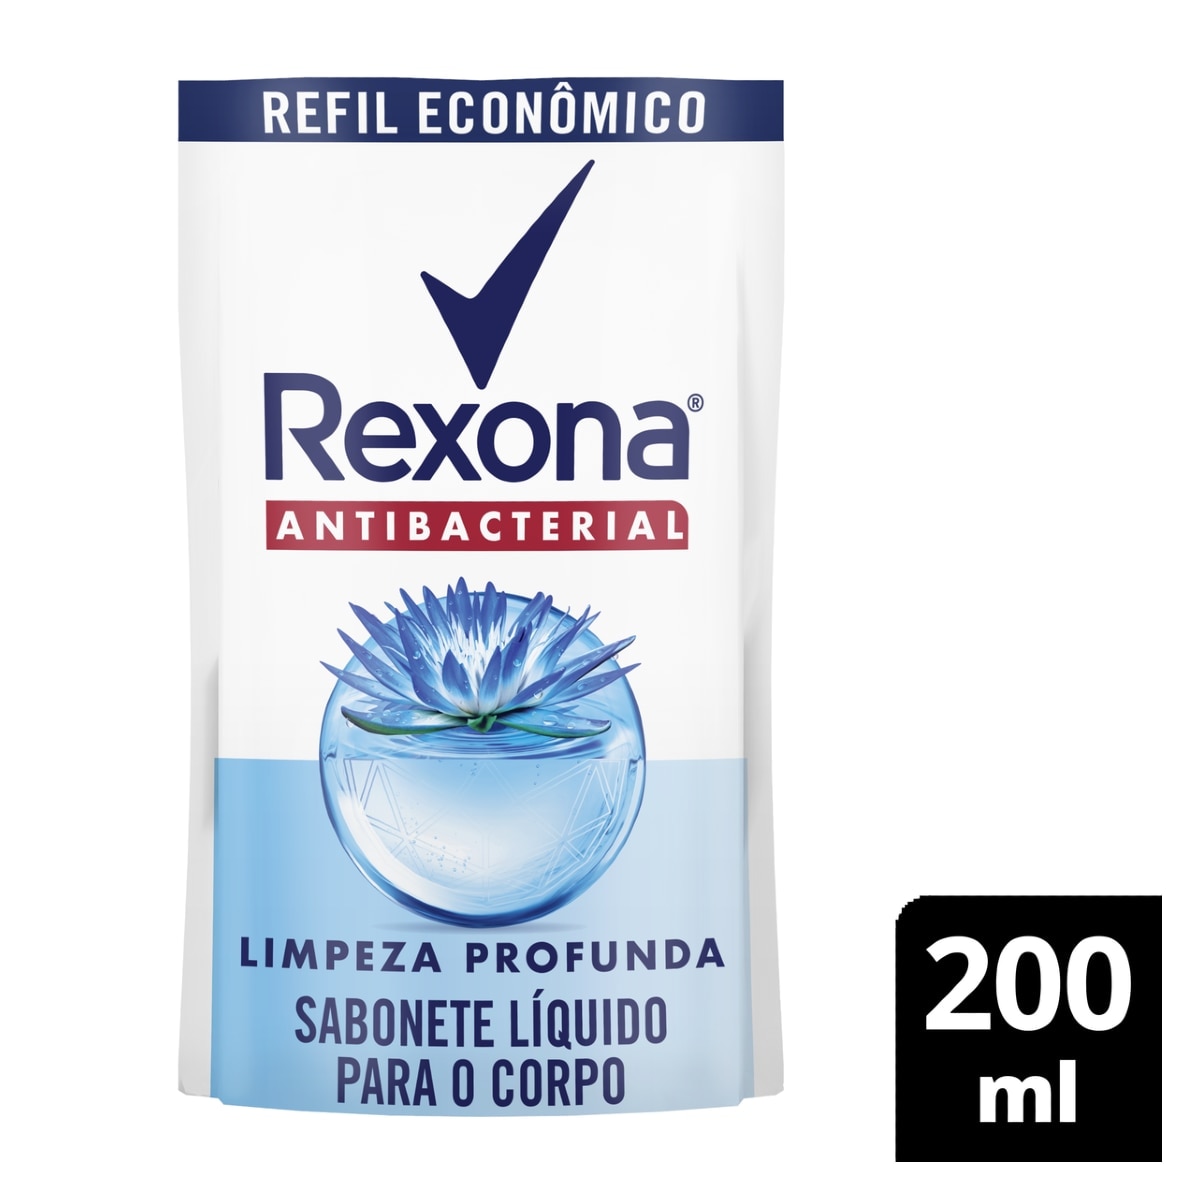 Sabonete Liquido Rexona Antibacterial Limpeza Profunda Refil 200ml